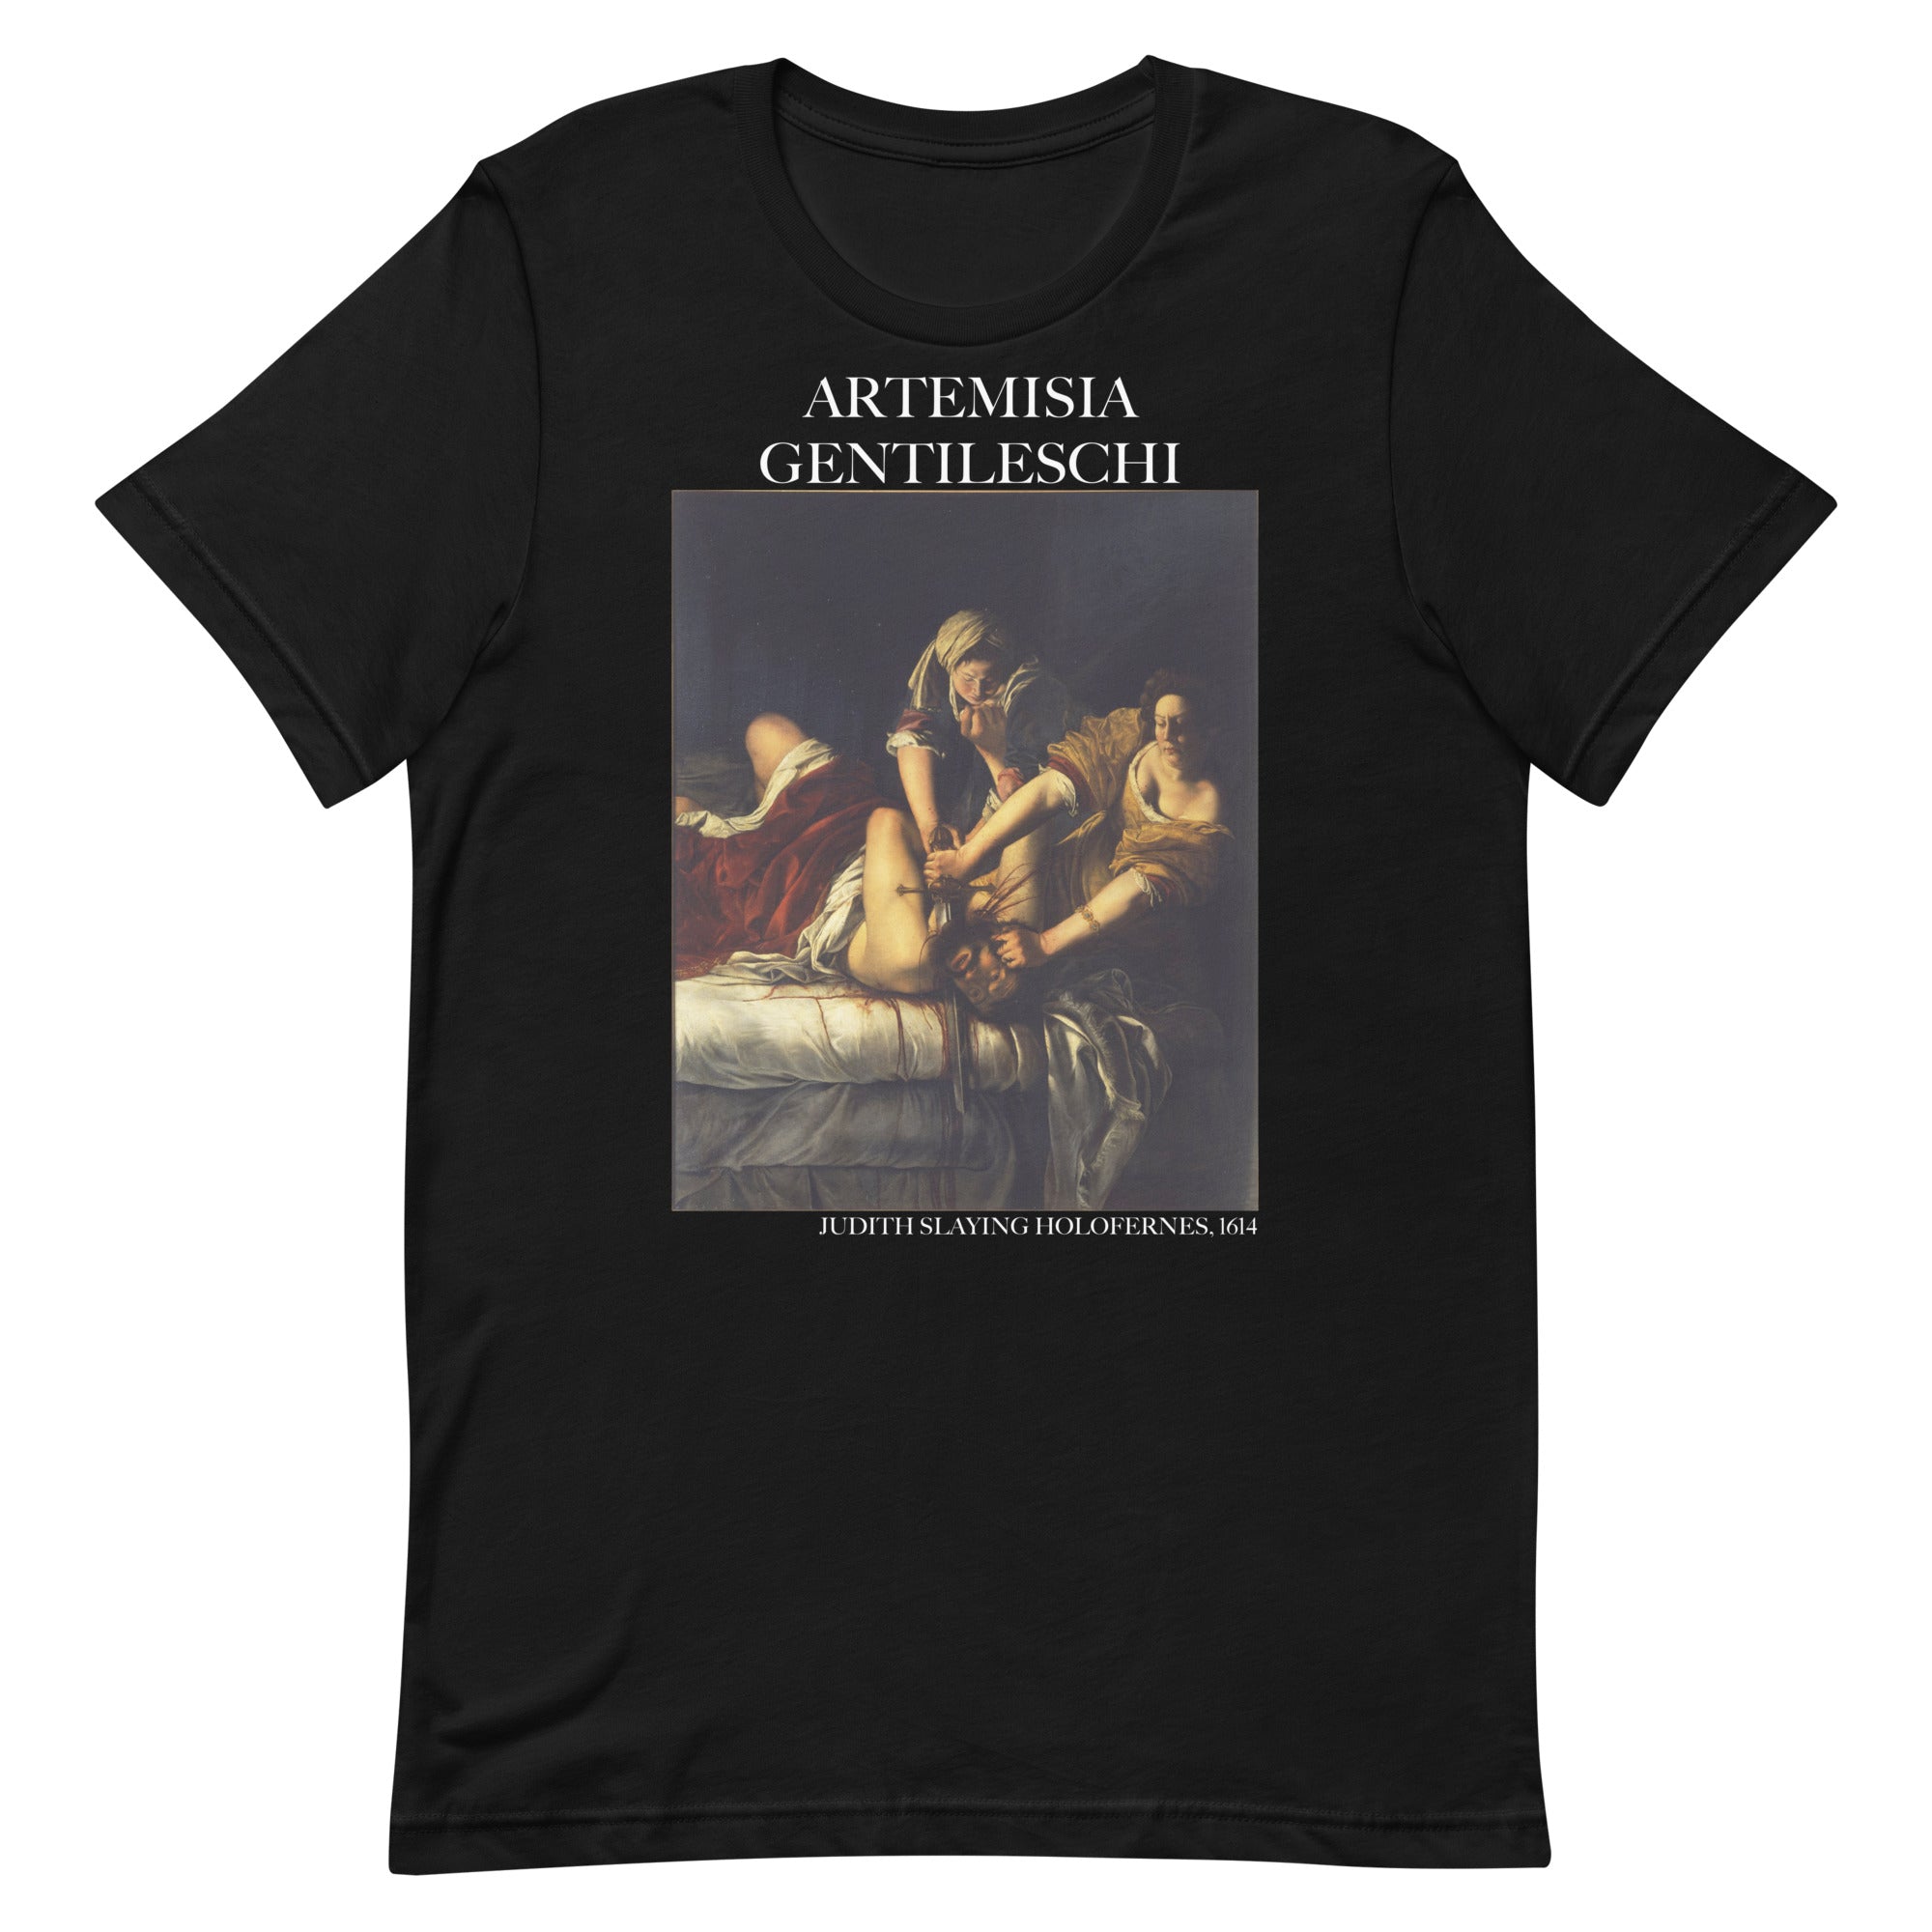 Artemisia Gentileschi 'Judith Slaying Holofernes' Famous Painting T-Shirt | Unisex Classic Art Tee